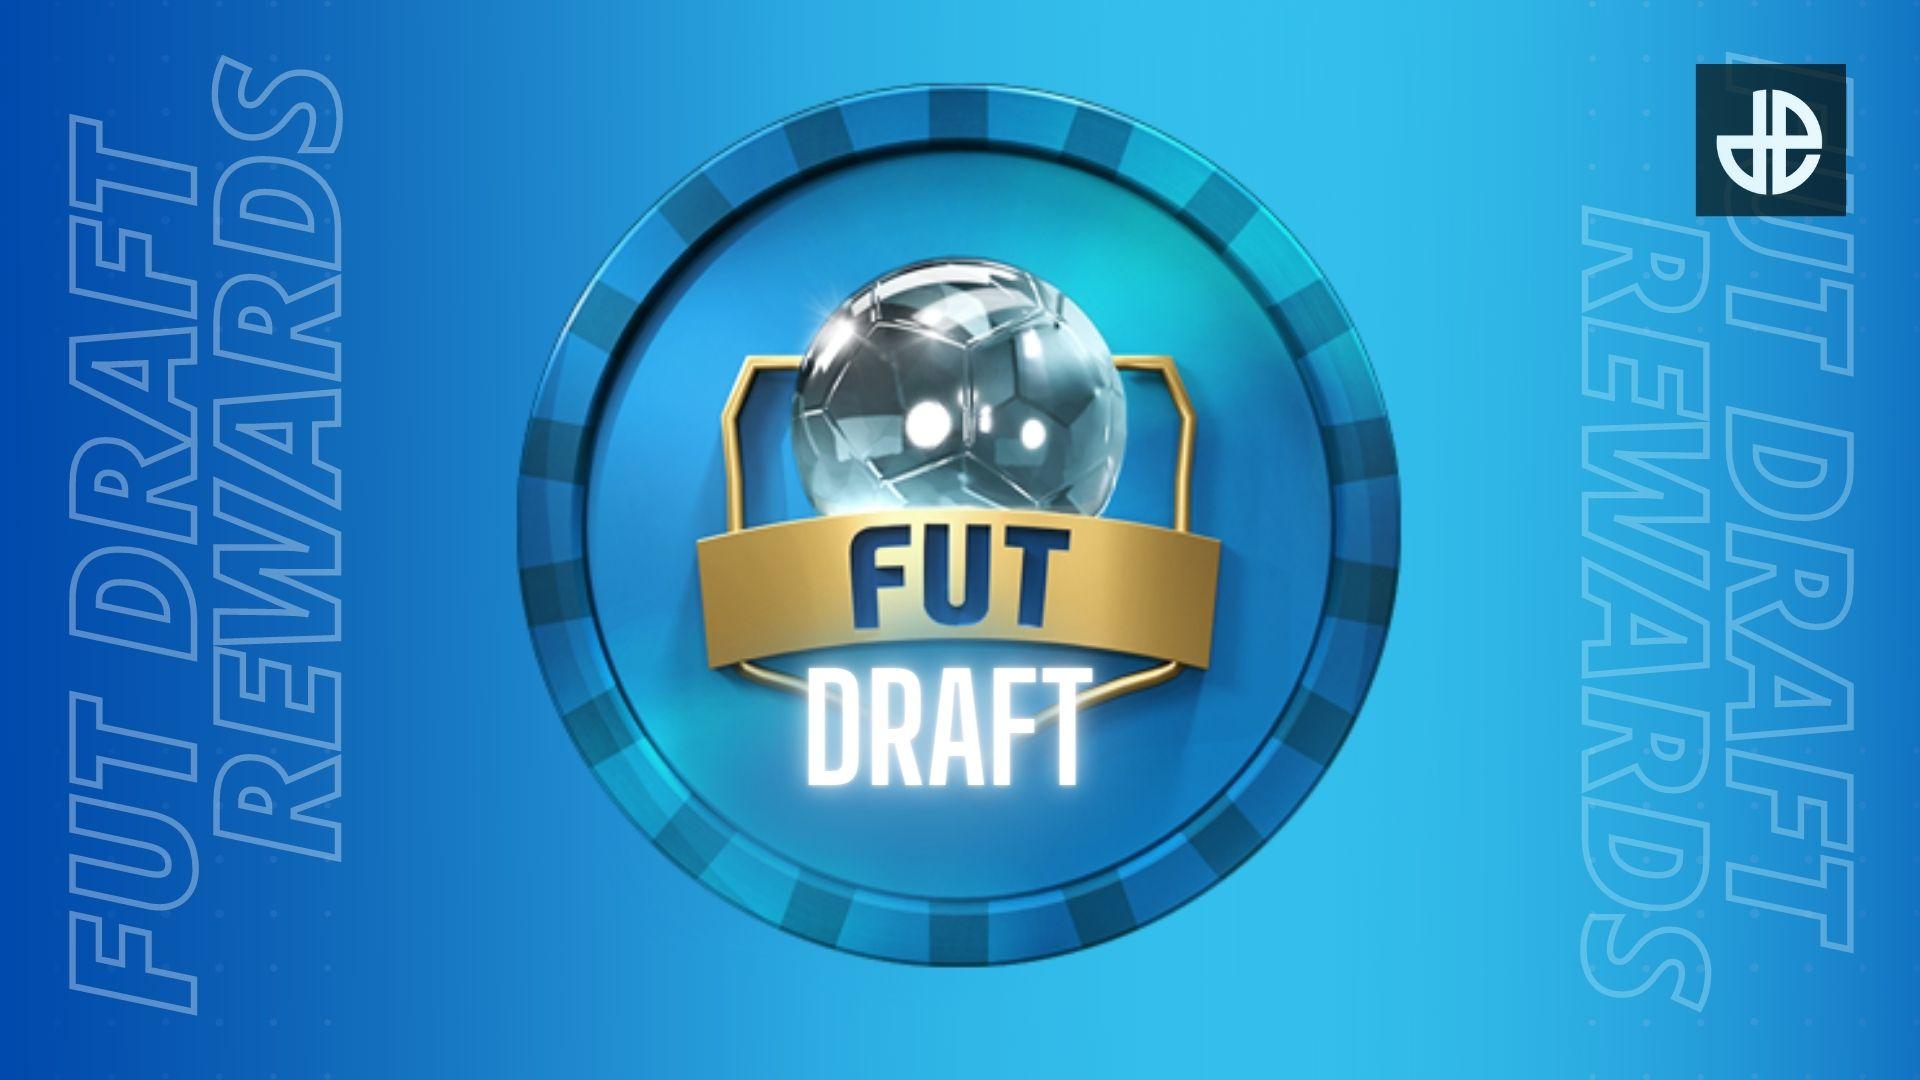 FIFA 21 FUT Draft Ultimate Team rewards